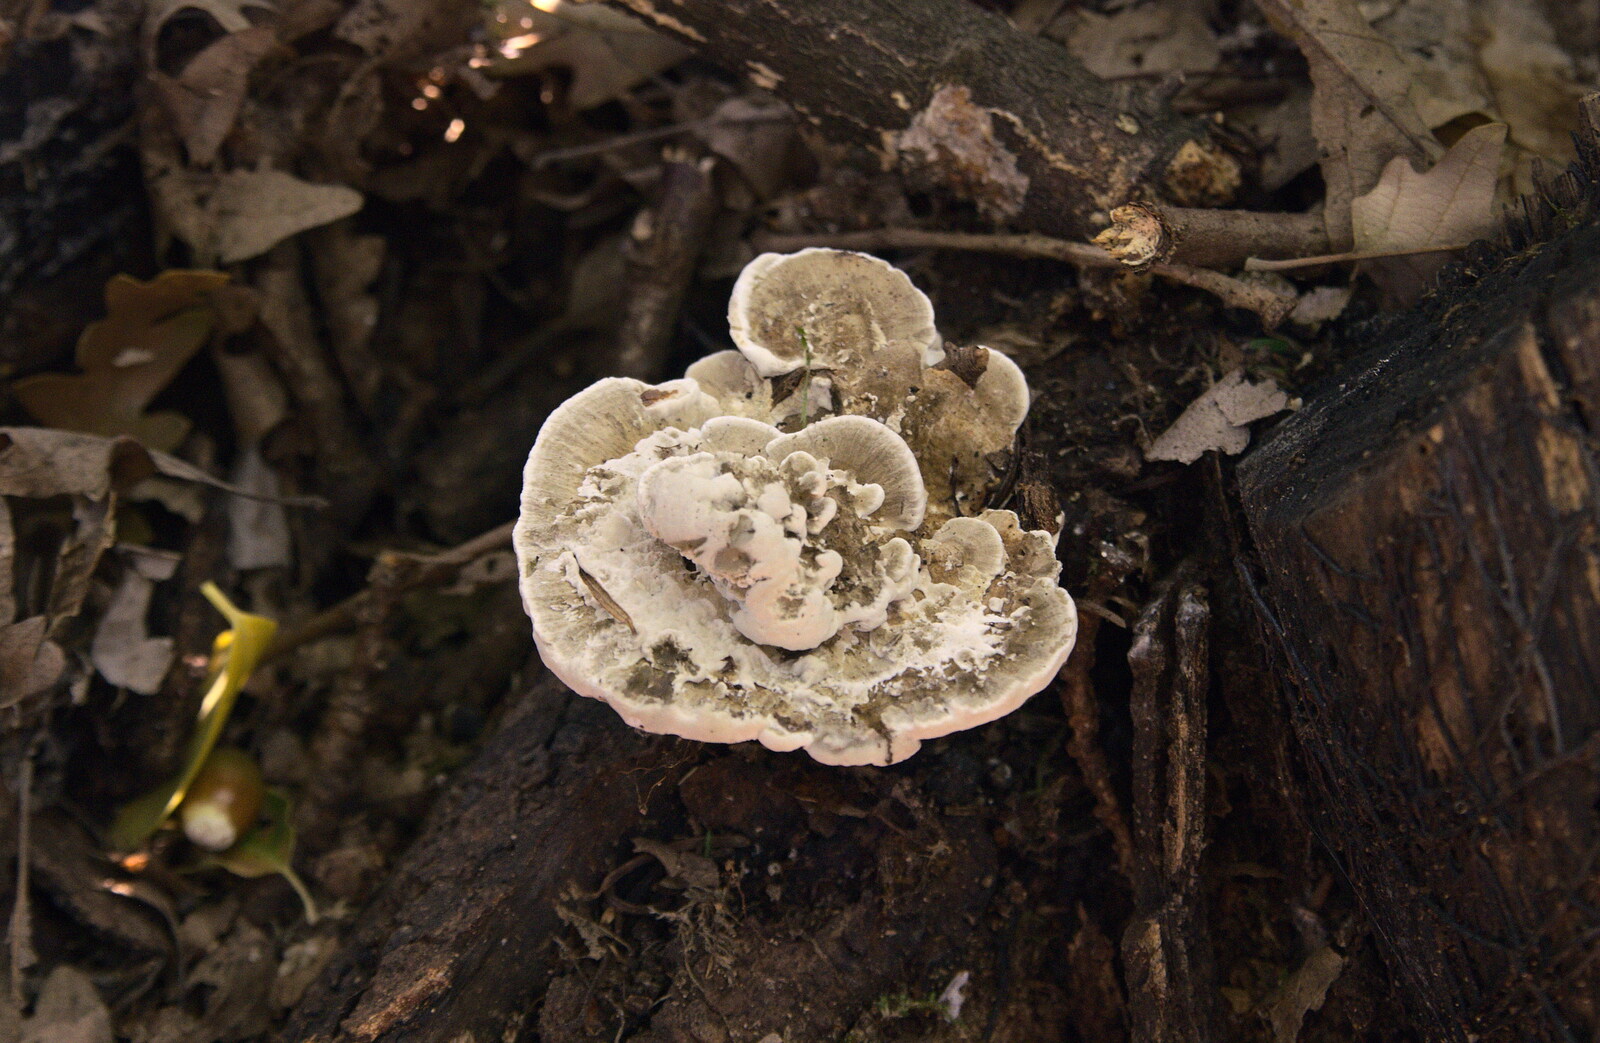 Some sort of bracket fungus from The Mushrooms of Thornham Estate, Thornham, Suffolk - 4th October 2015